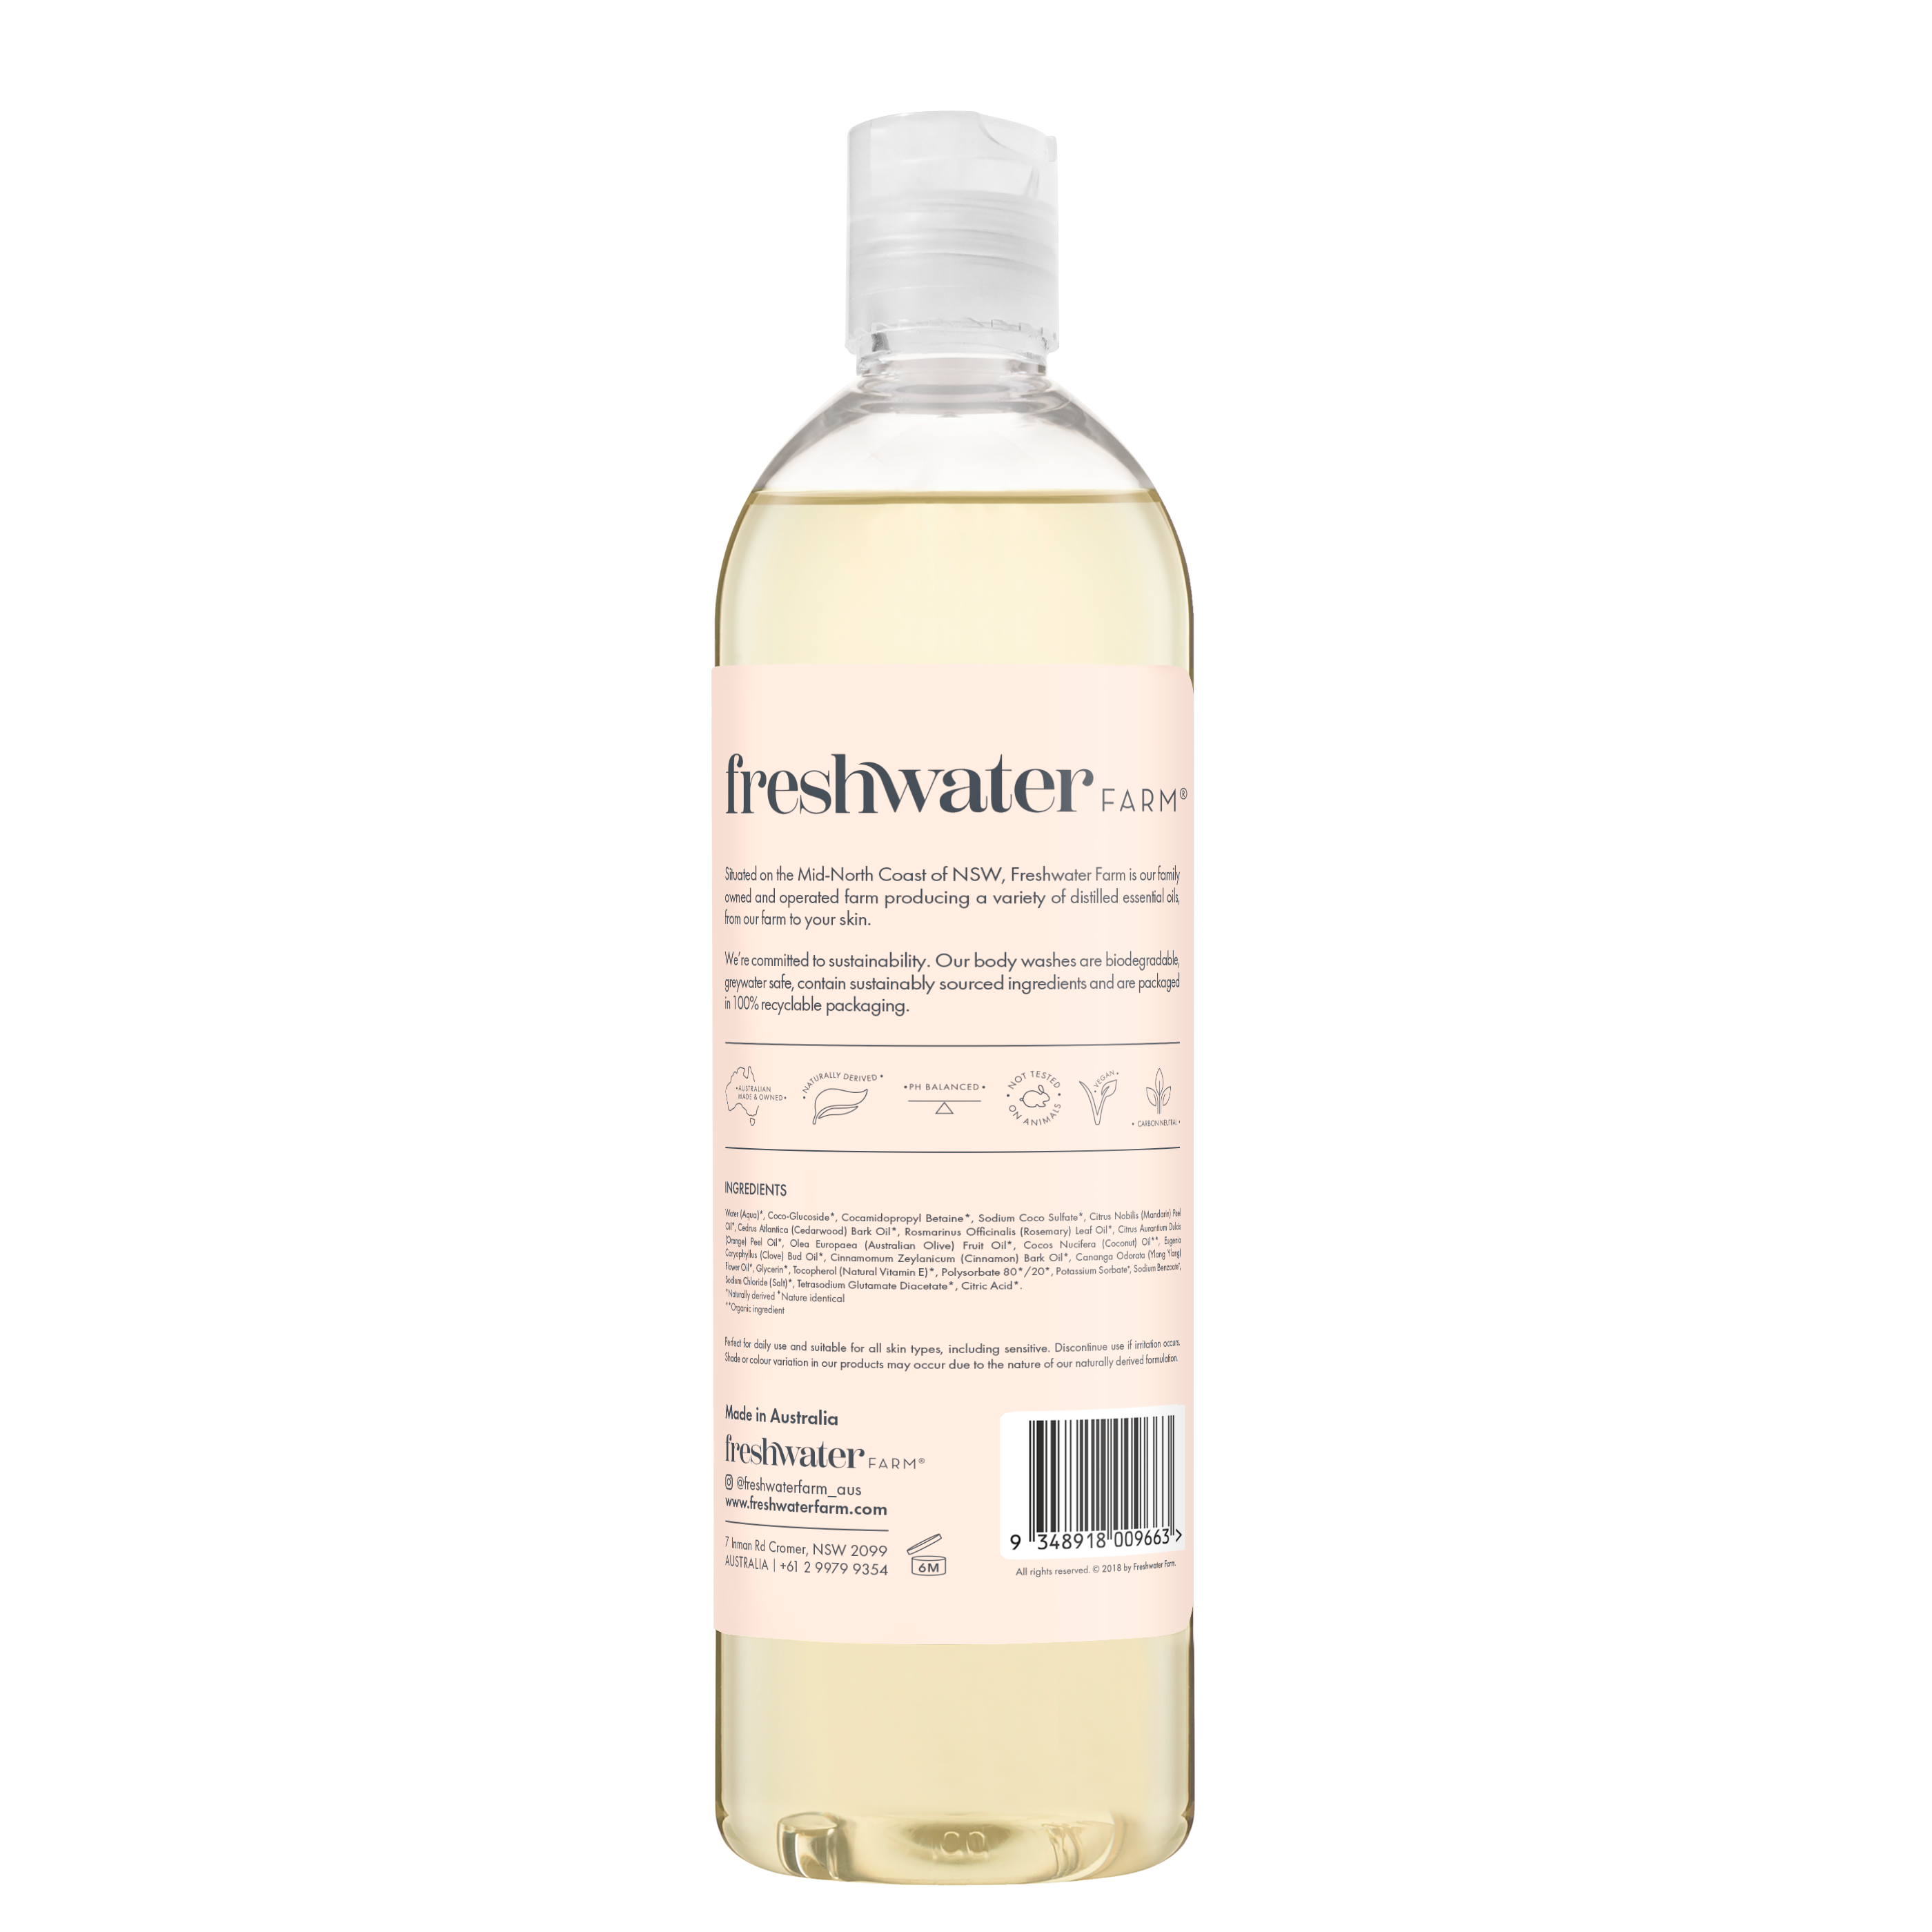 BODY WASH | Revitalising Mandarin + Cedarwood Oil 500ml